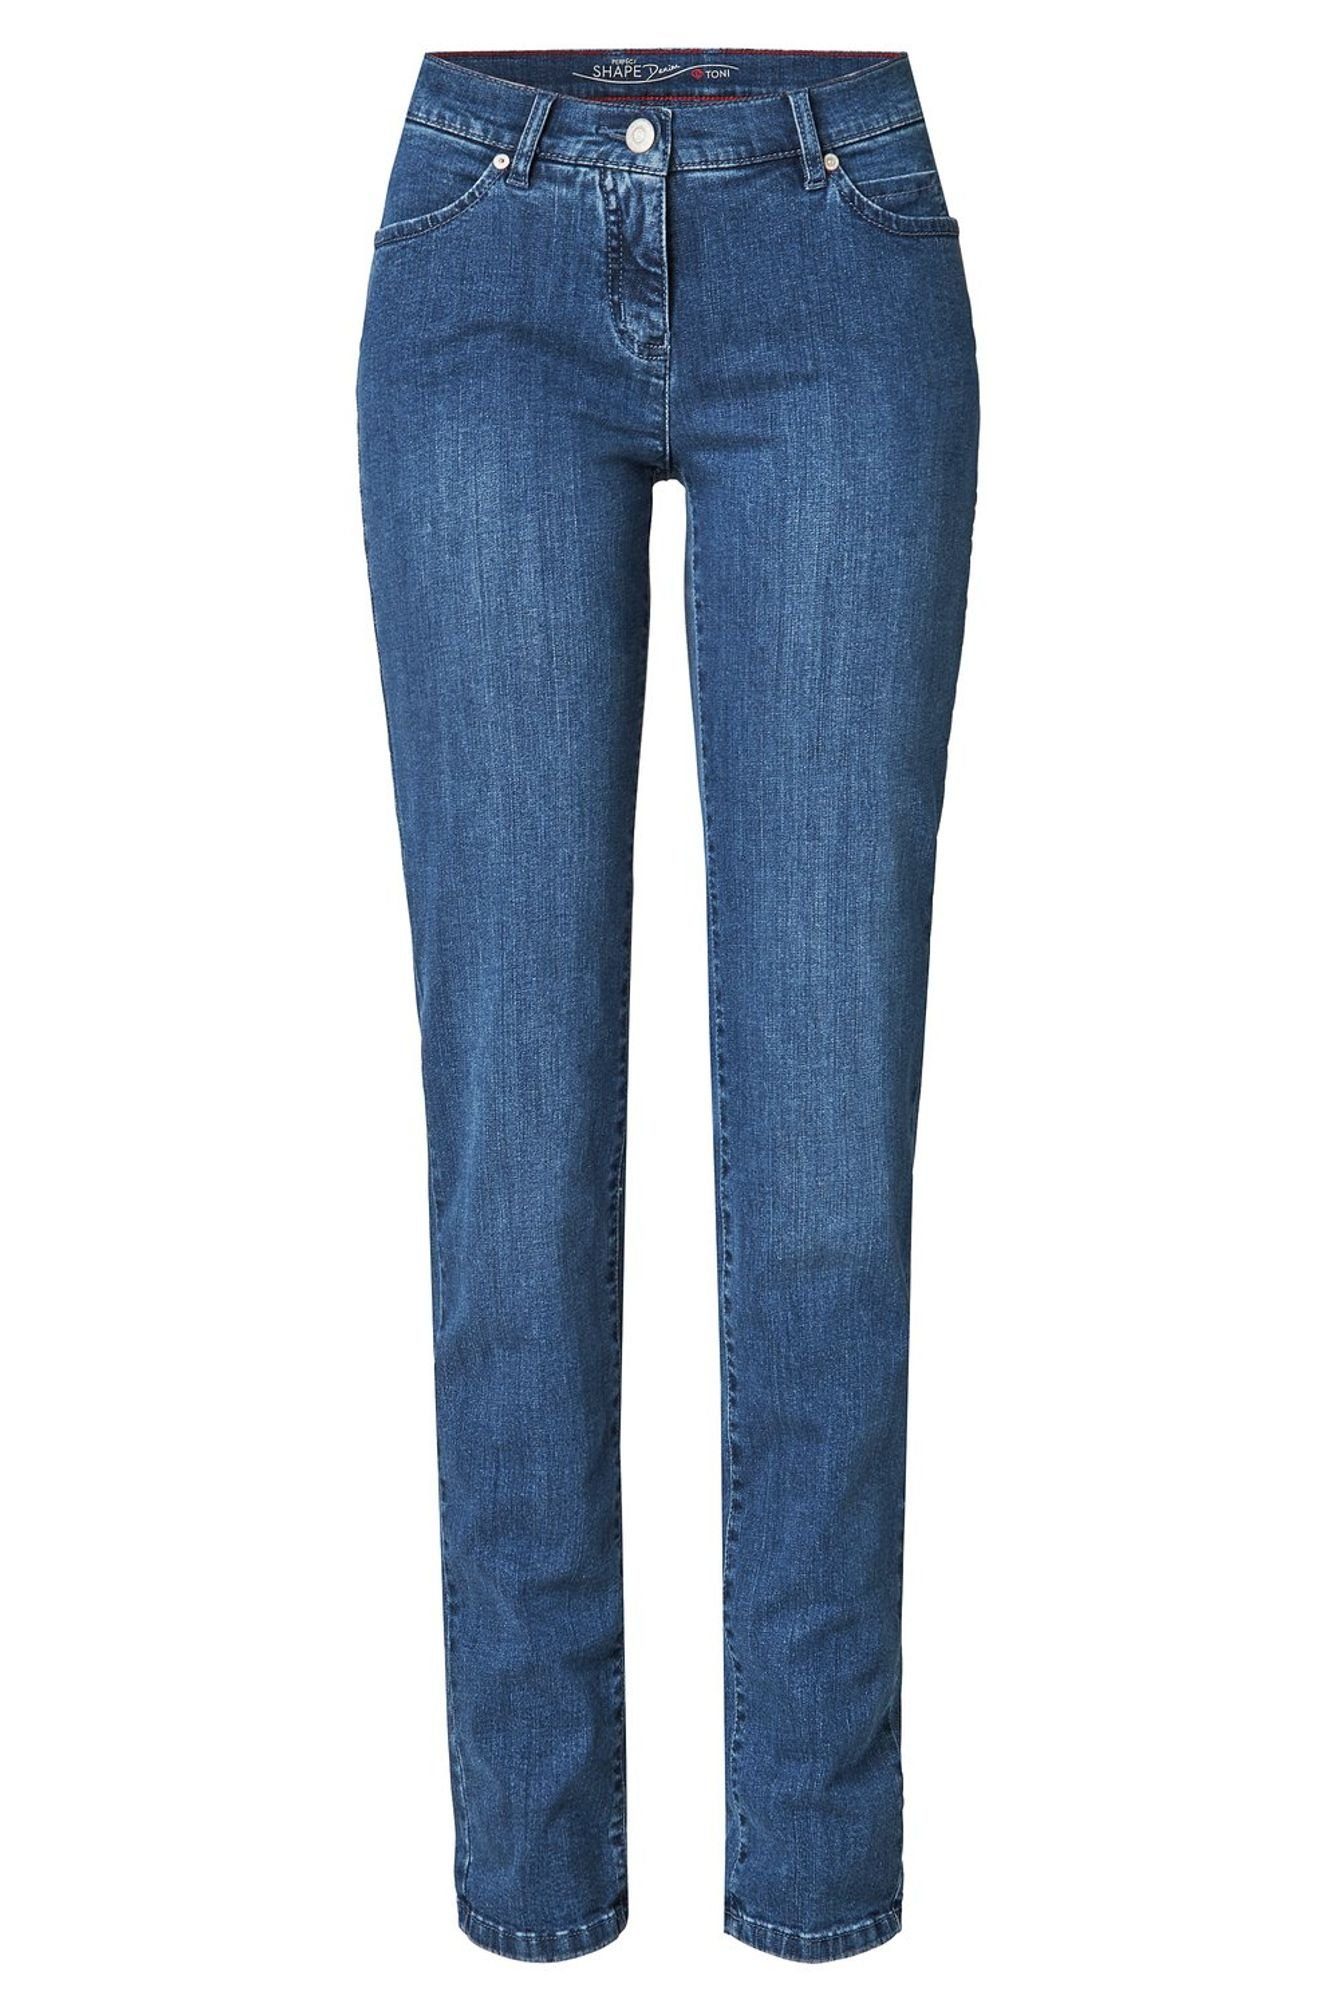 TONI 5-Pocket-Jeans 12-04 1106 5-Pocket-Design mid blue used (502)